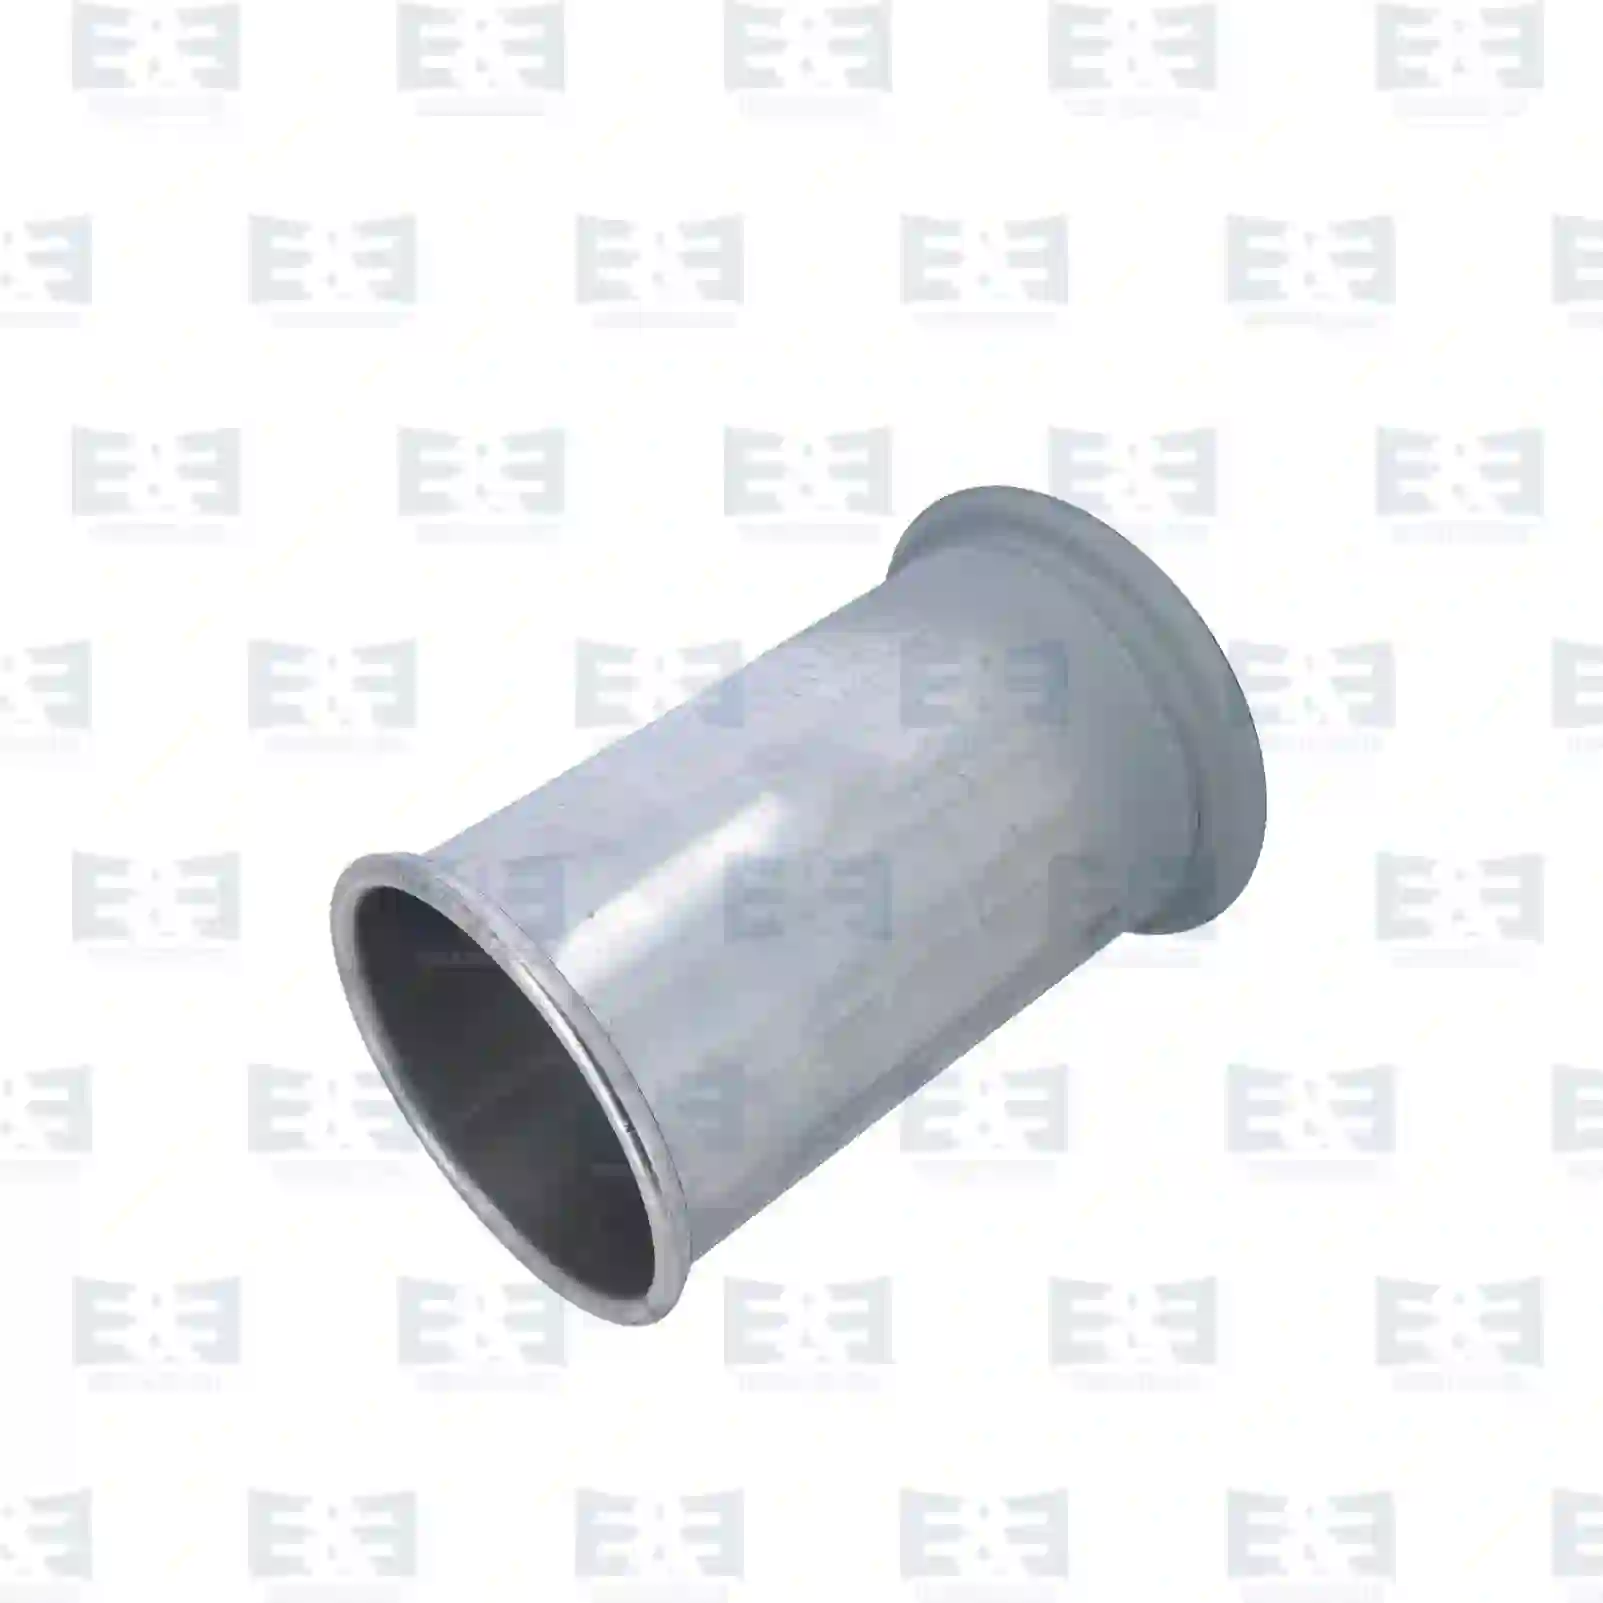  End pipe || E&E Truck Spare Parts | Truck Spare Parts, Auotomotive Spare Parts